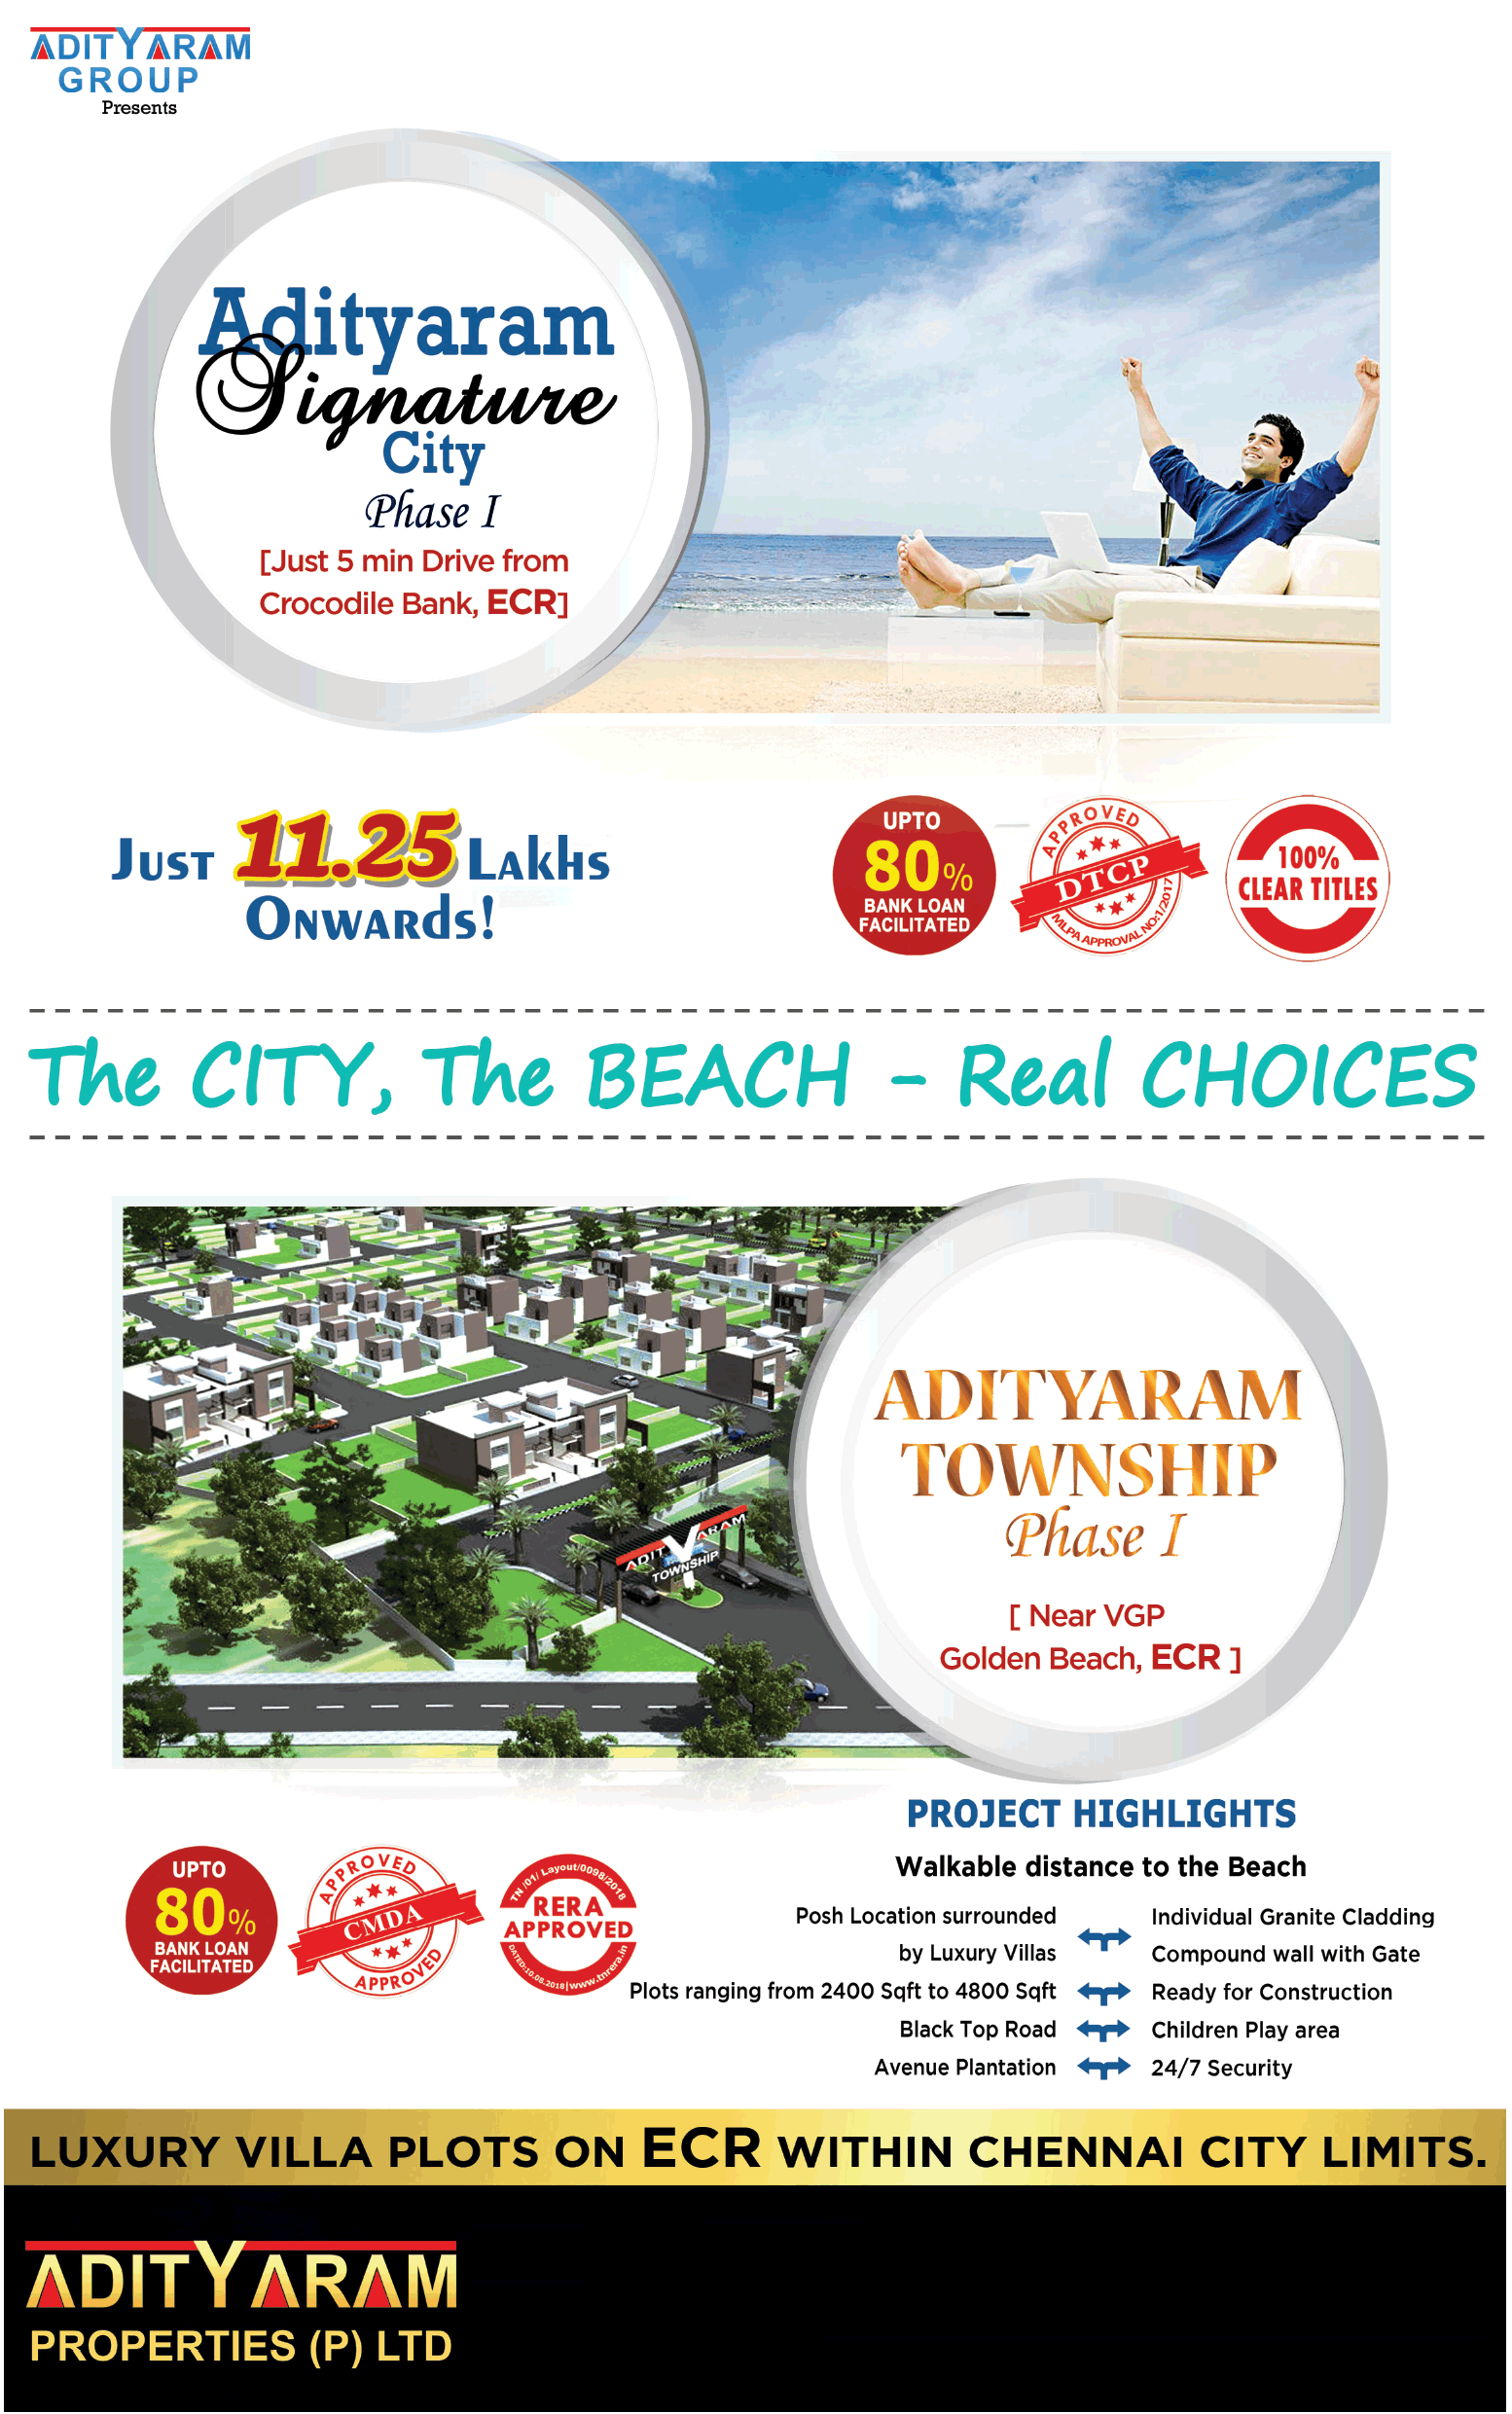 Presenting luxury villa plots at Rs. 11.25 lakhs at Adityaram Township Phase 1 in Chennai Update